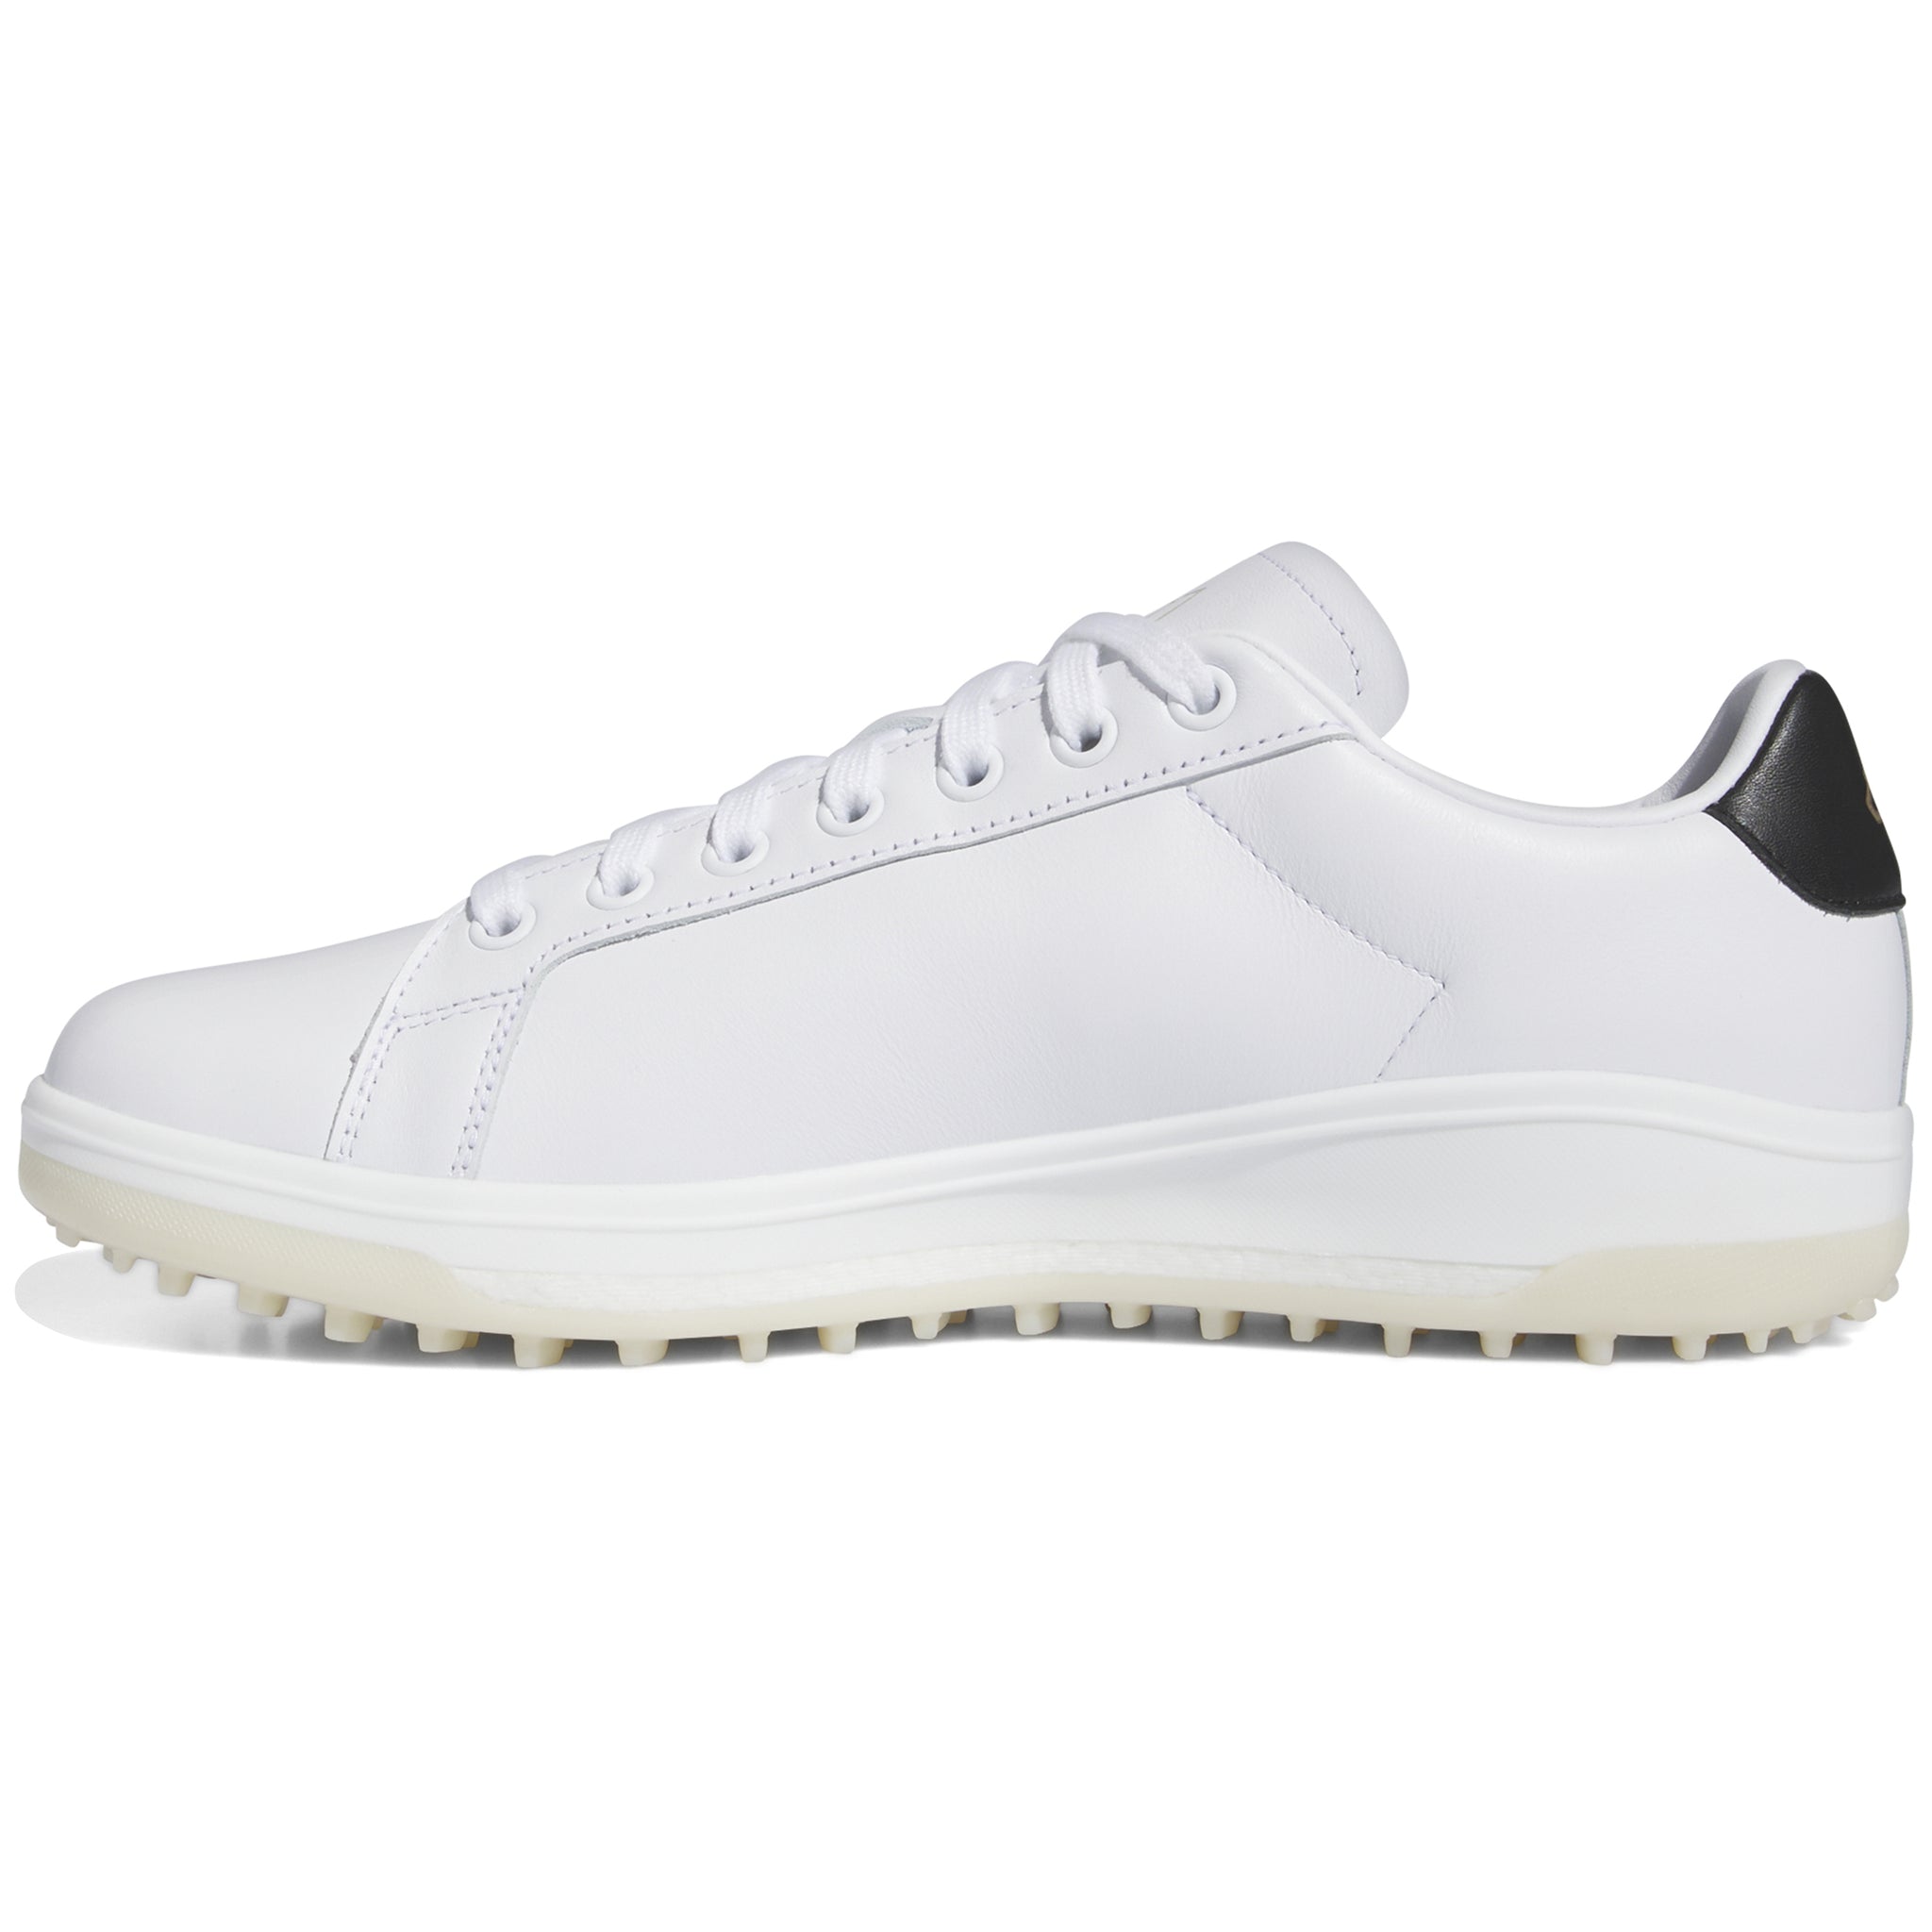 adidas-go-to-spikeless-2-golf-shoes-if0241-white-core-black-alumina